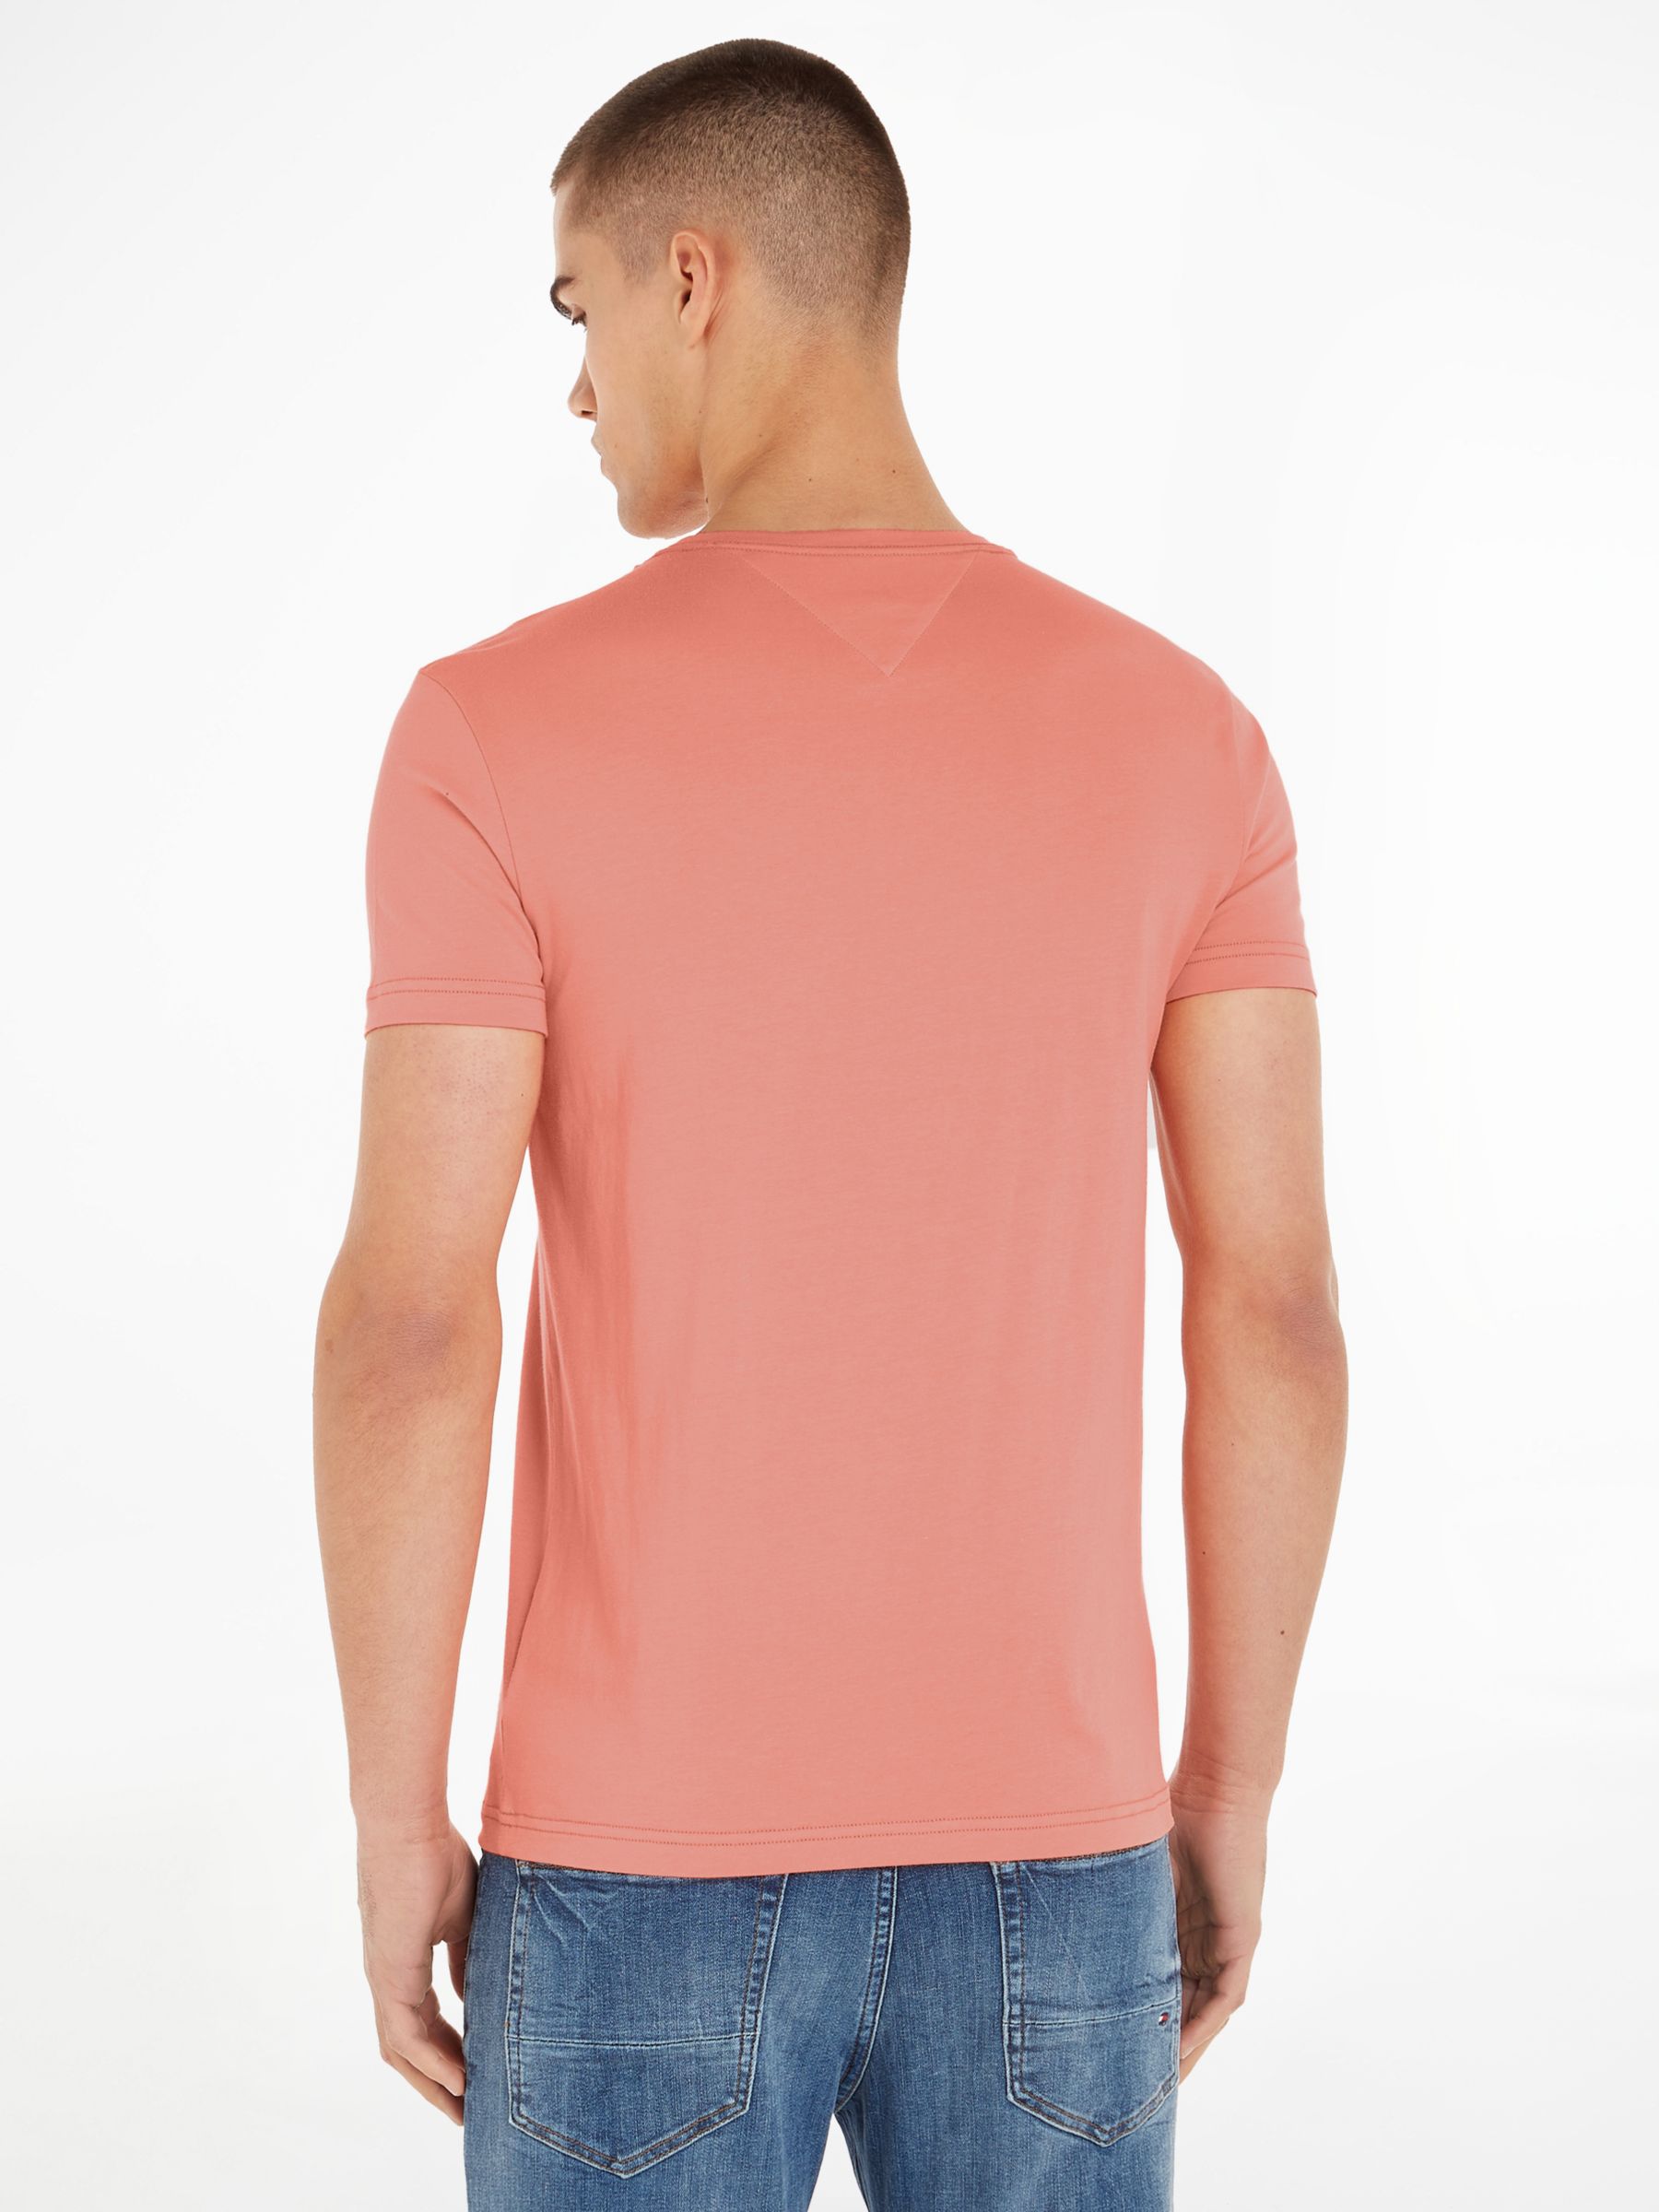 Perennial tidevand junk Tommy Hilfiger Core Stretch Slim Fit Crew Neck T-Shirt, Peach Dusk at John  Lewis & Partners